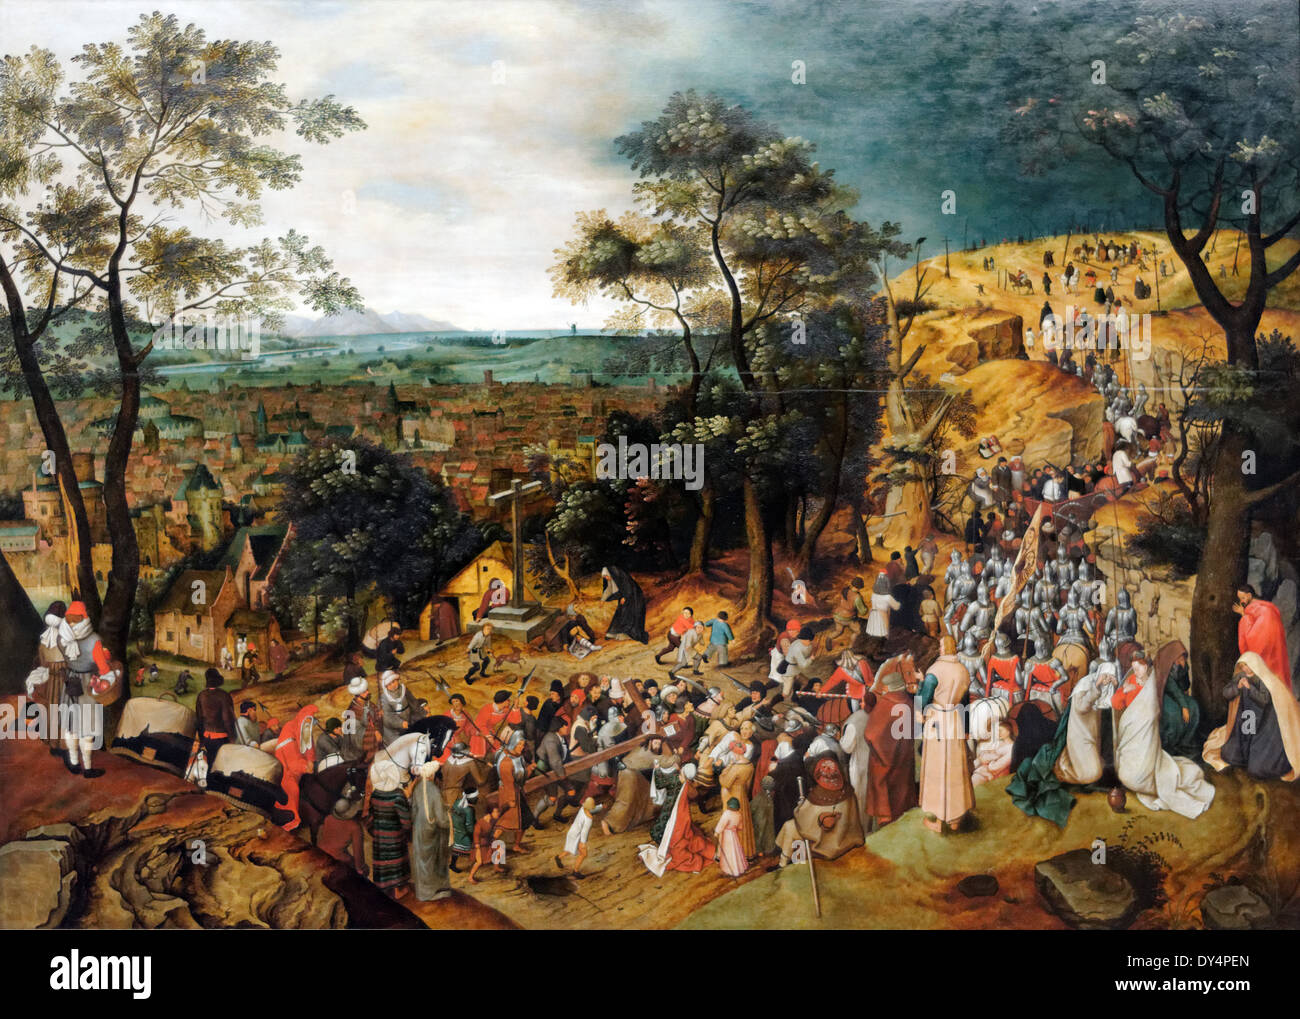 Pieter Brueghel the Young - the Cross - 1606 - XVII th Century - Flemish School - Gemäldegalerie - Berlin Stock Photo